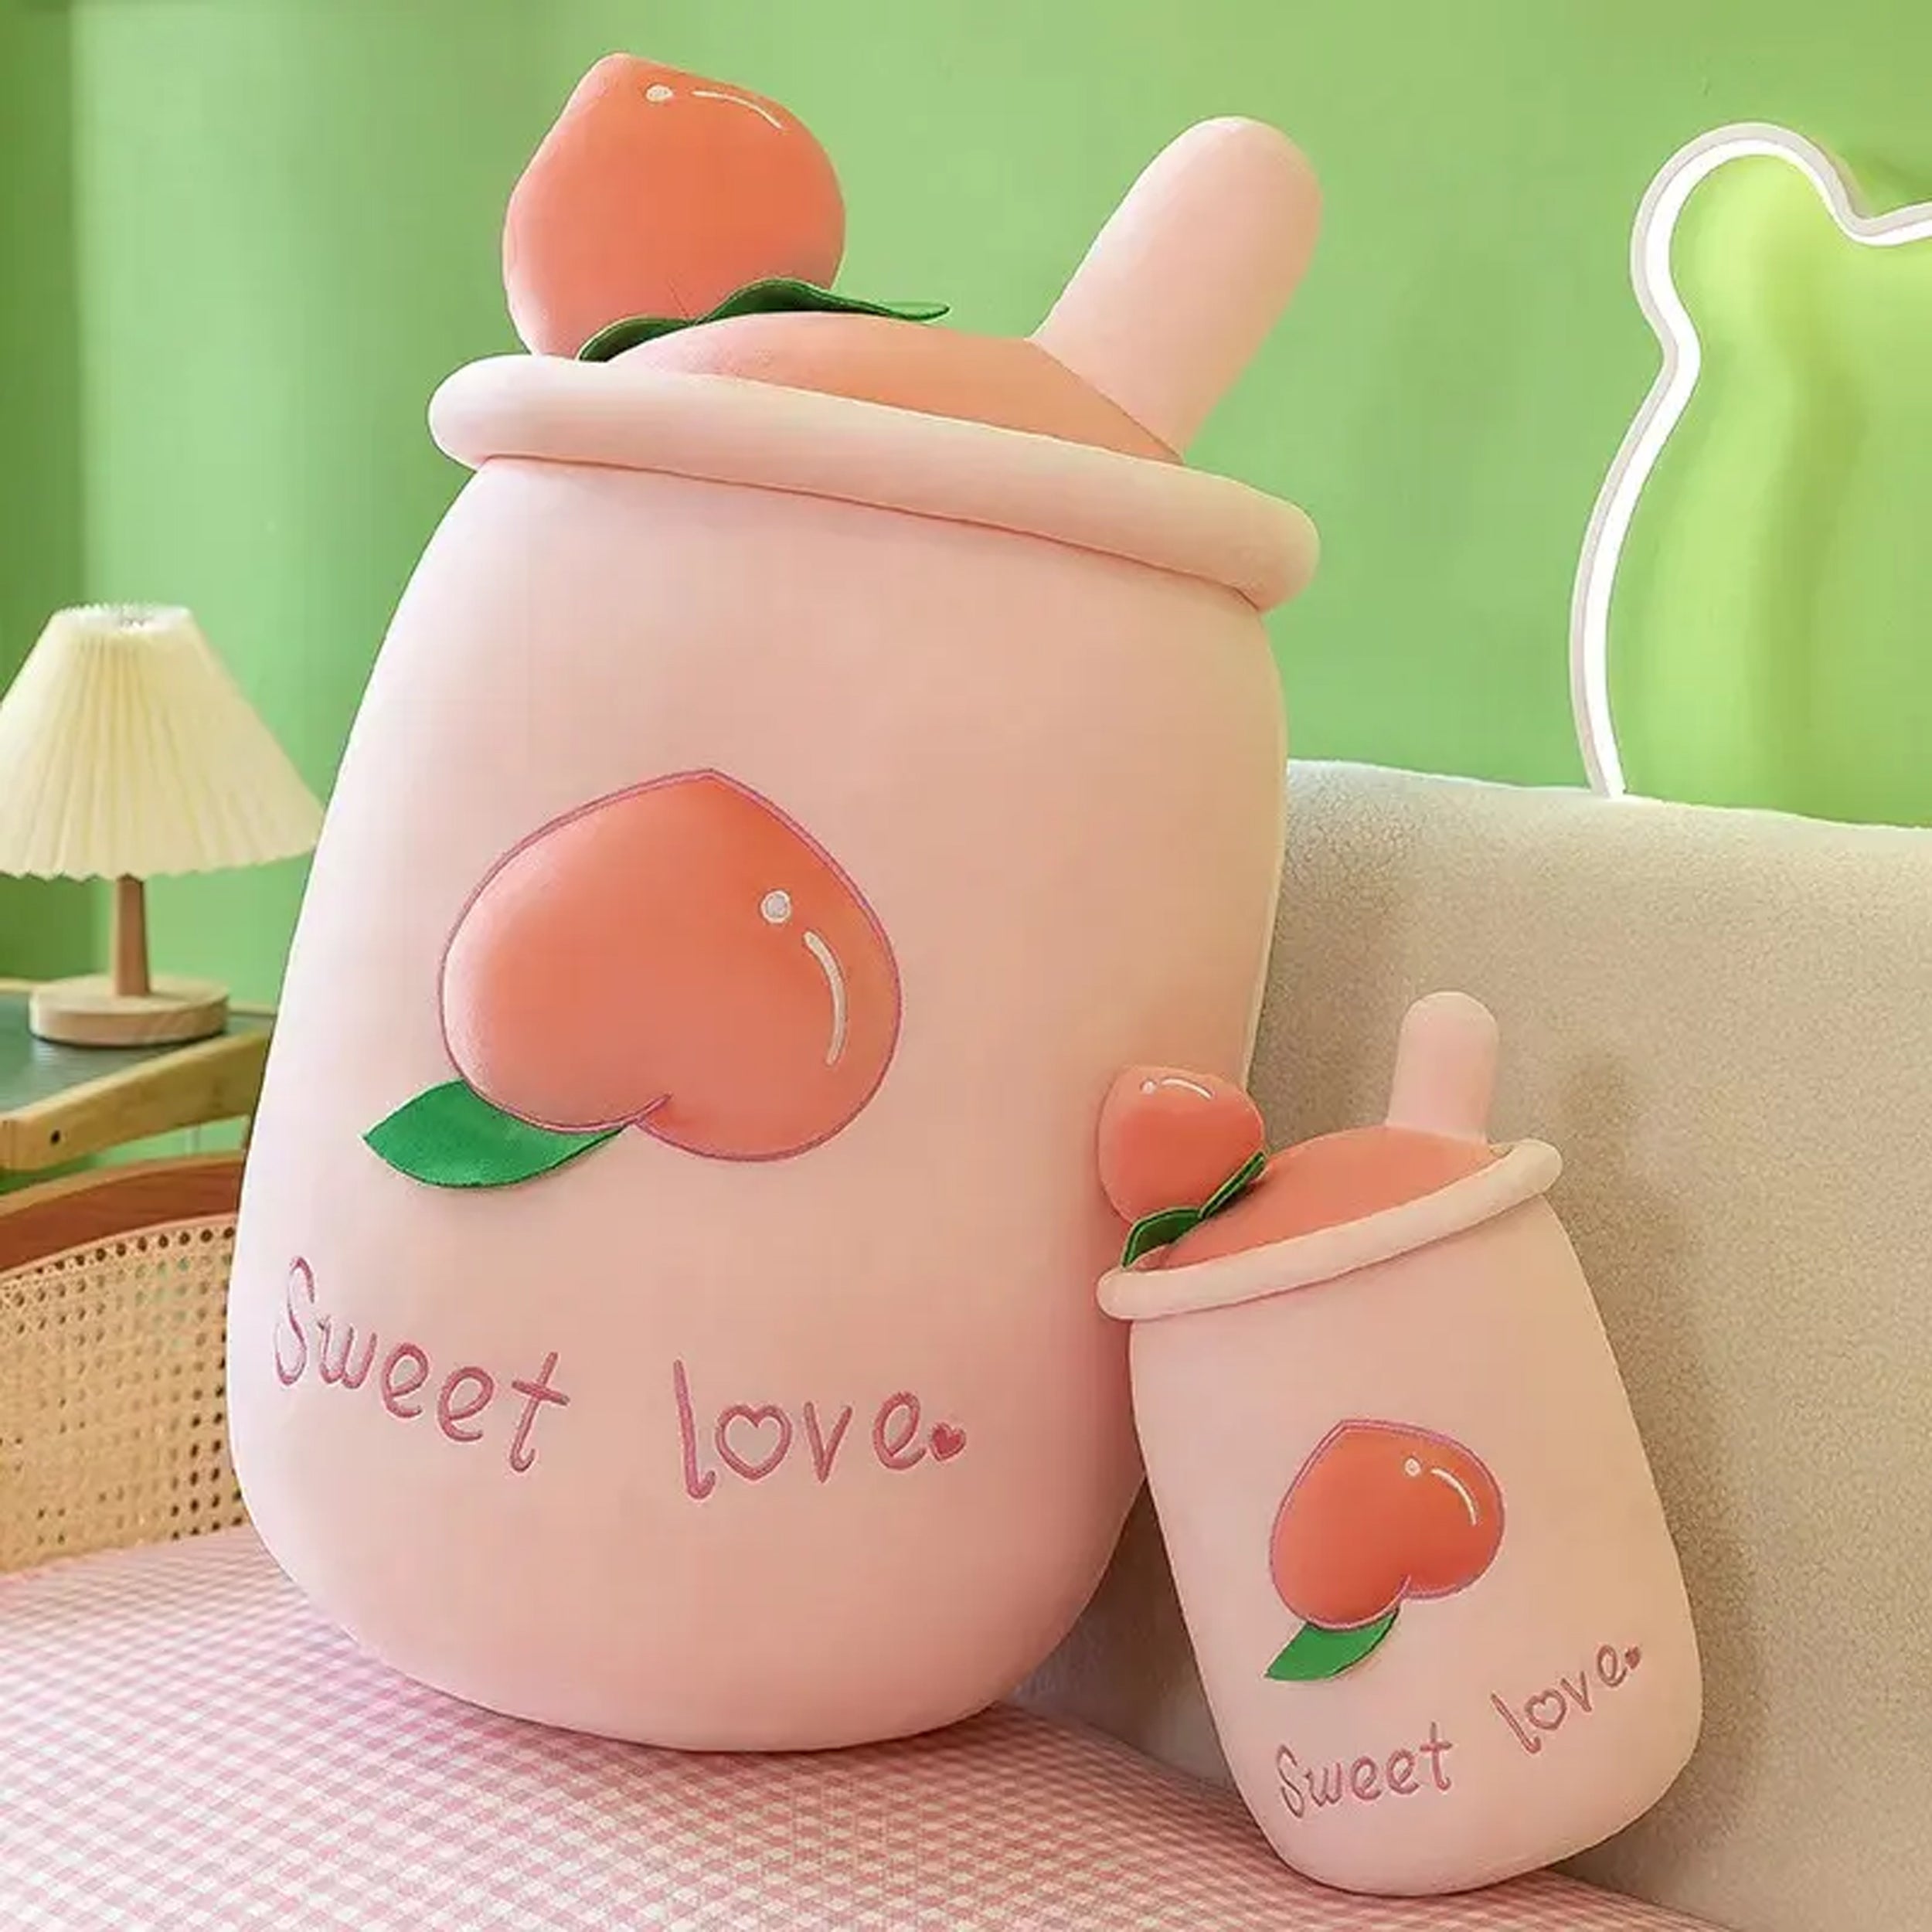 Cute and Cuddly Milk Tea Boba Watermelon Blueberry Peach Plush Pillow Décor Gift